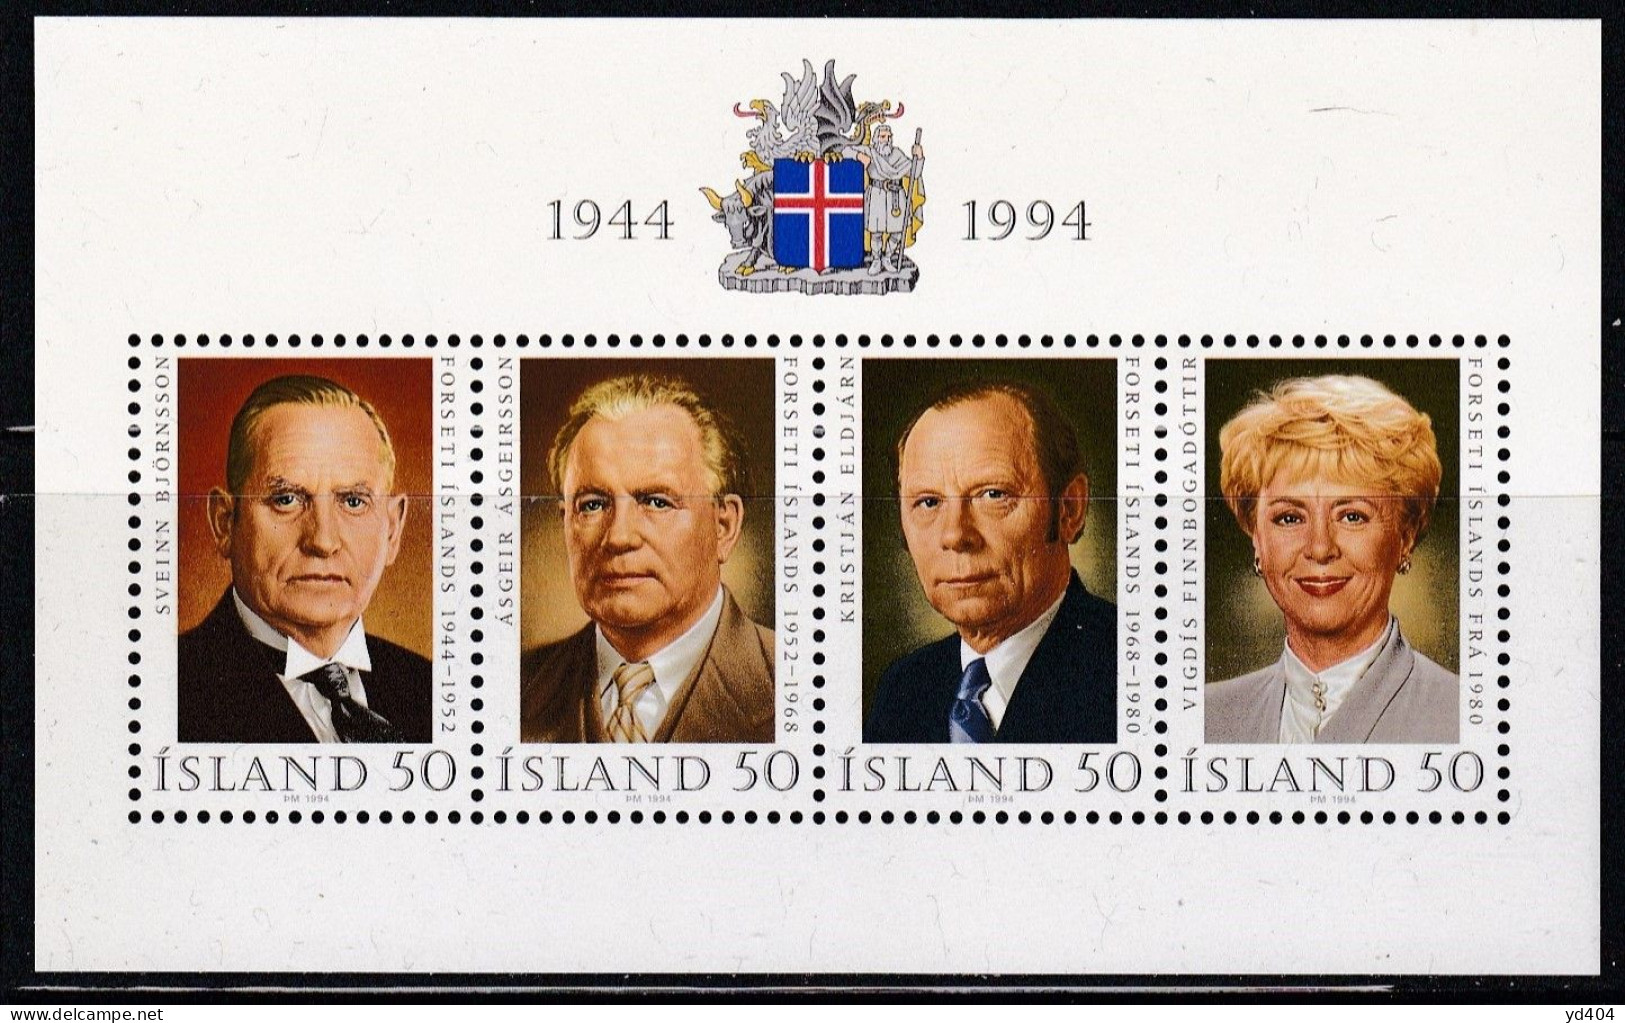 IS484 – ISLANDE – ICELAND – 1994 – 50th ANNIVERSARY OF REPUBLIC – SG # MS 829 MNH 11,50 € - Blocks & Kleinbögen